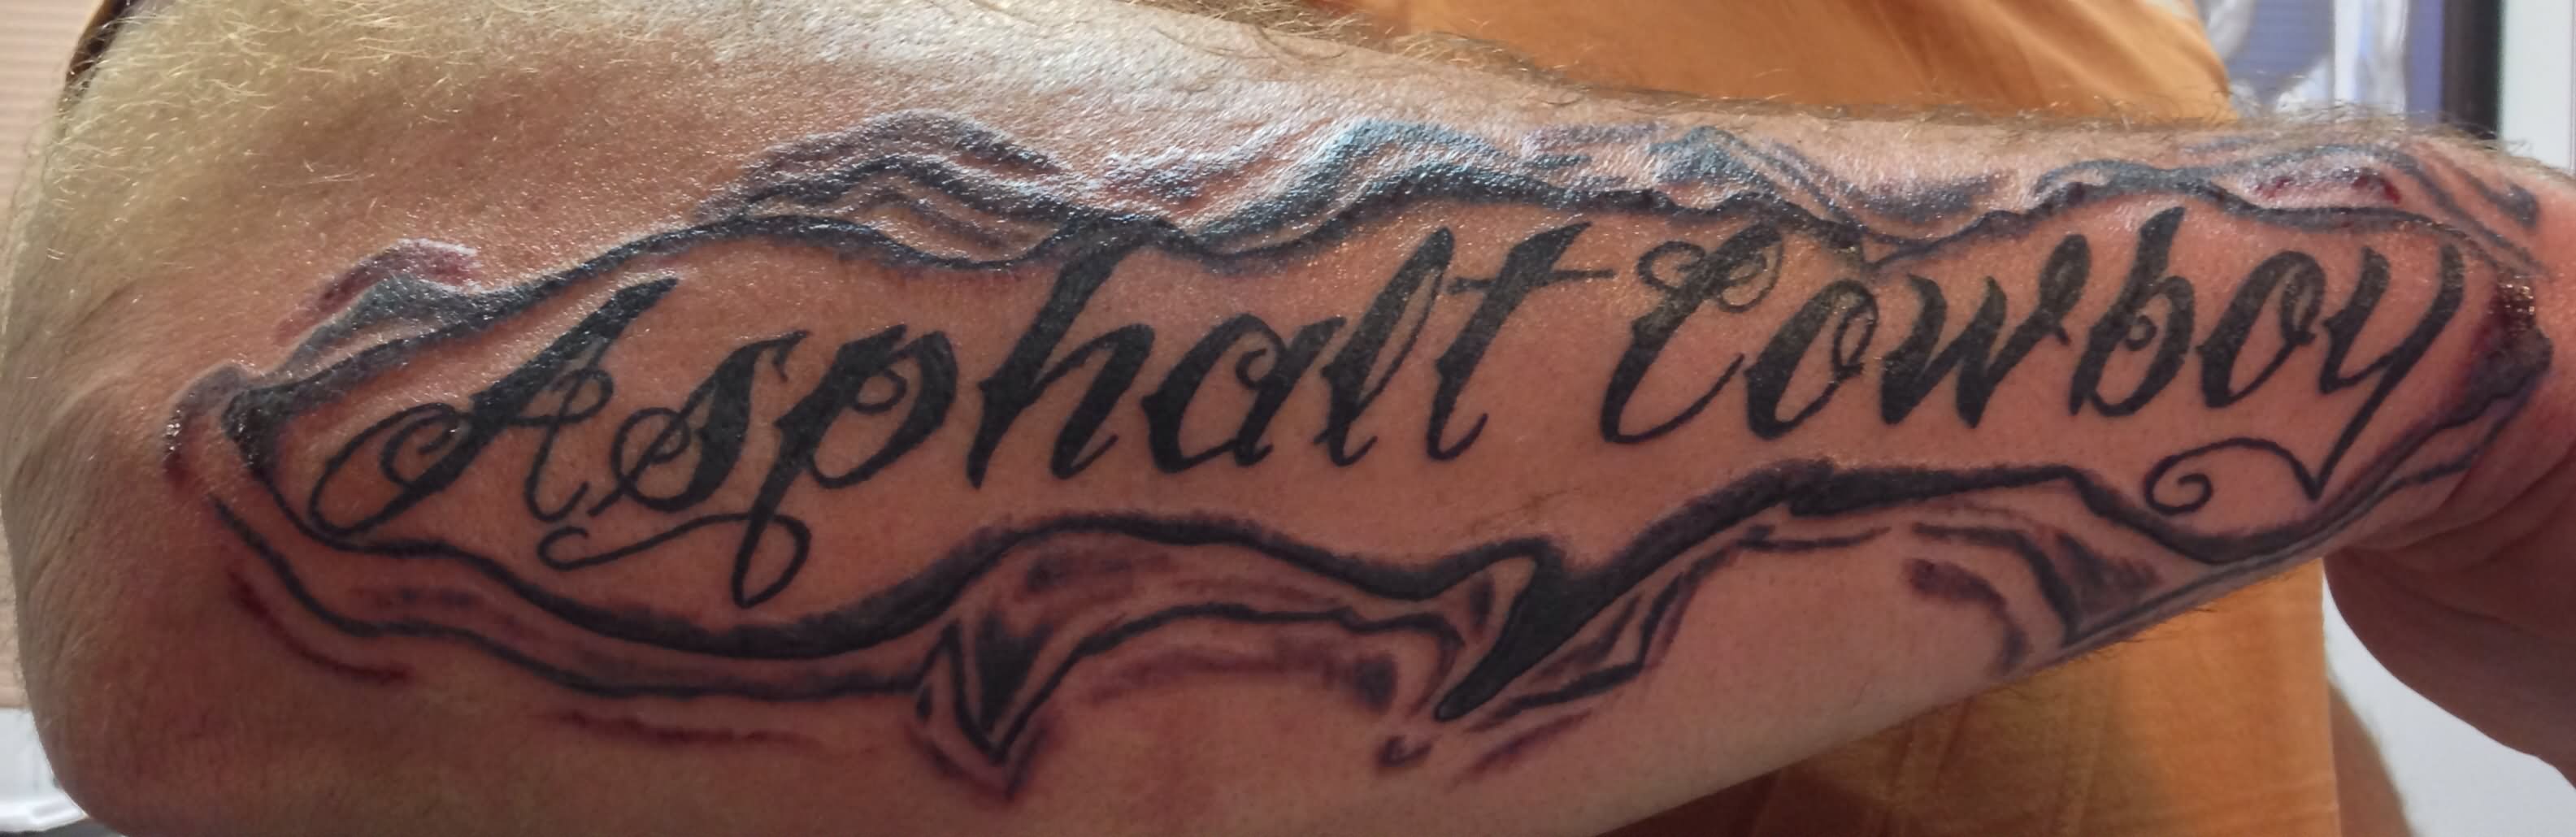 Asphalt Cowboy Lettering Tattoo On Right Forearm